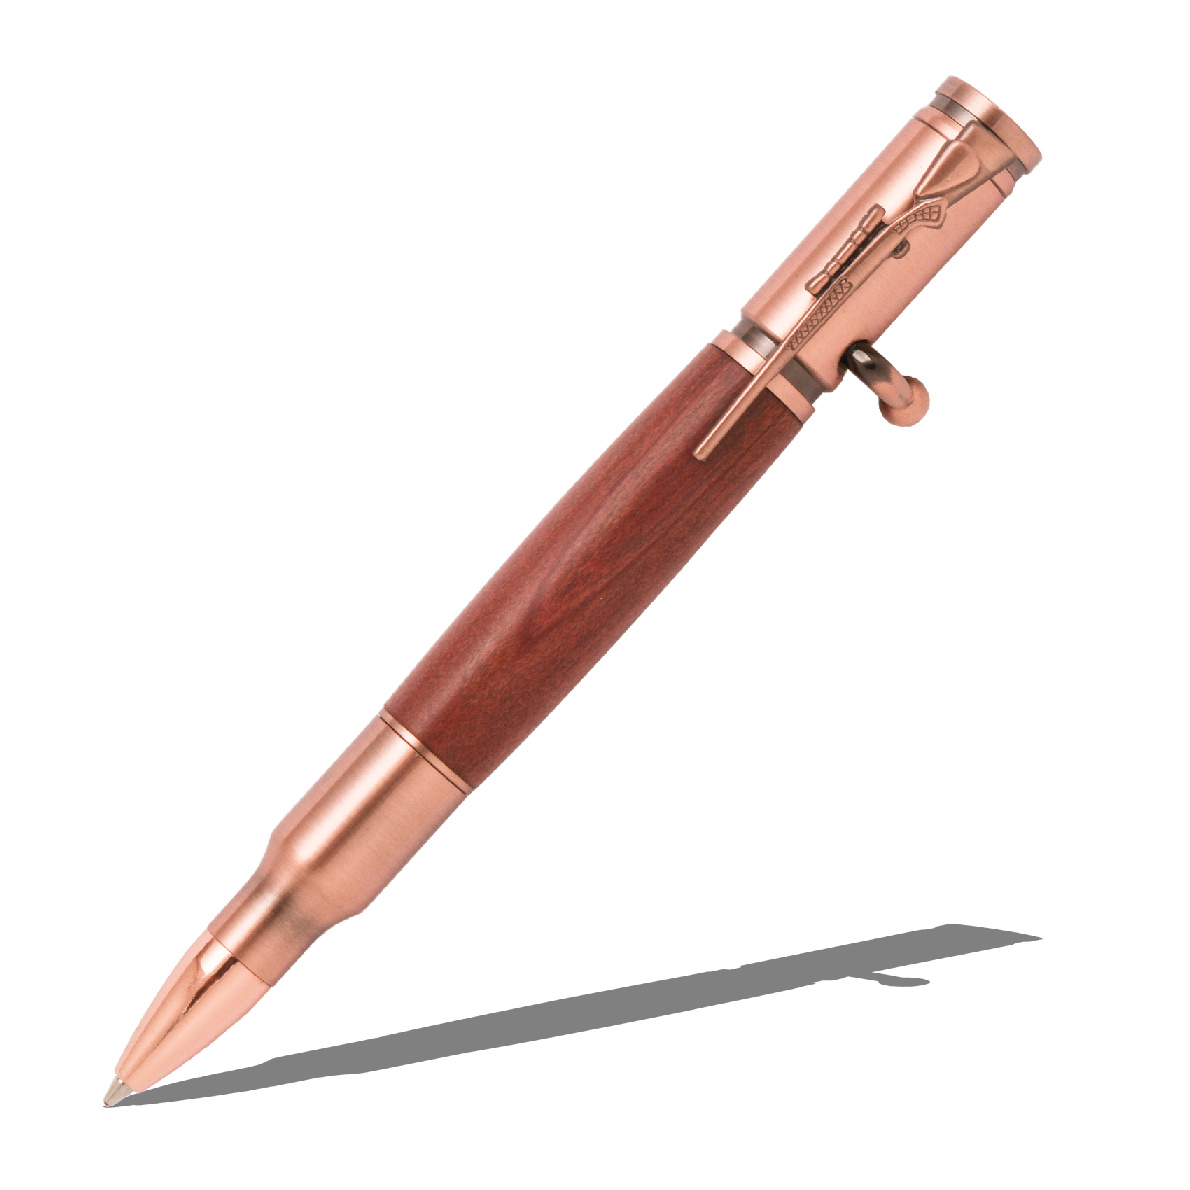 Magnum Bolt Action Antique Copper Pen Kit at Penn State Industries